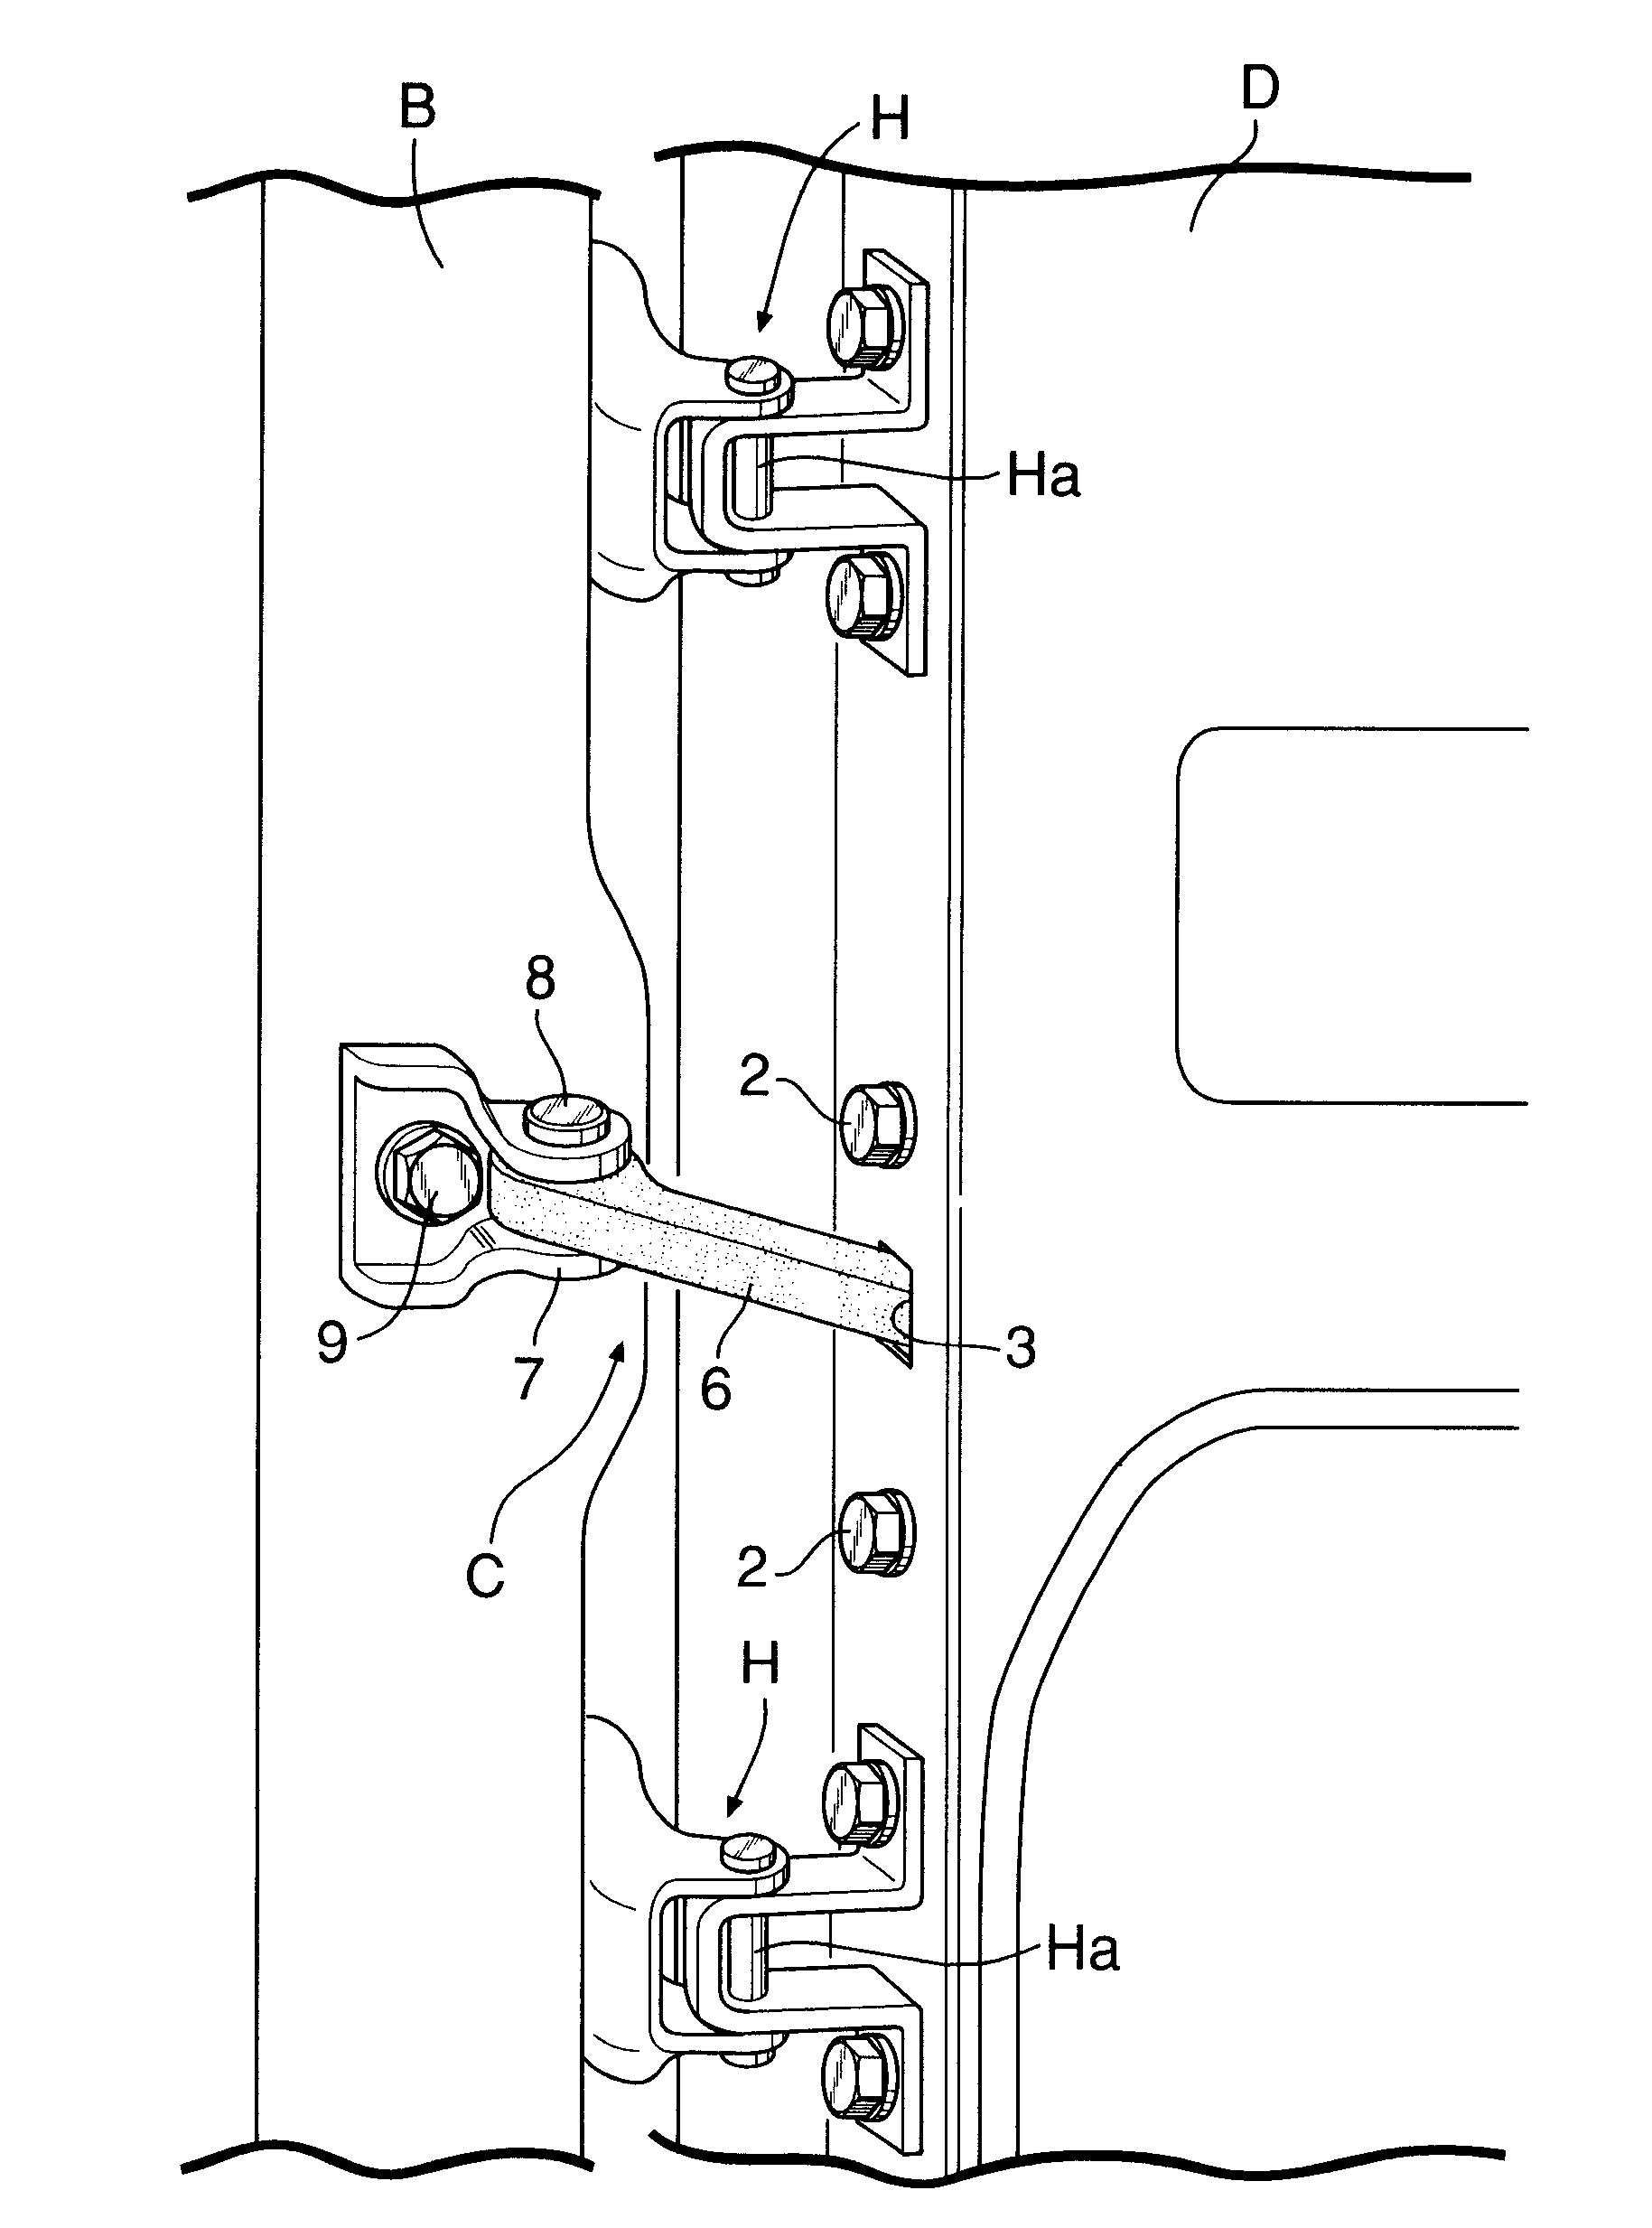 Door checker for automobile